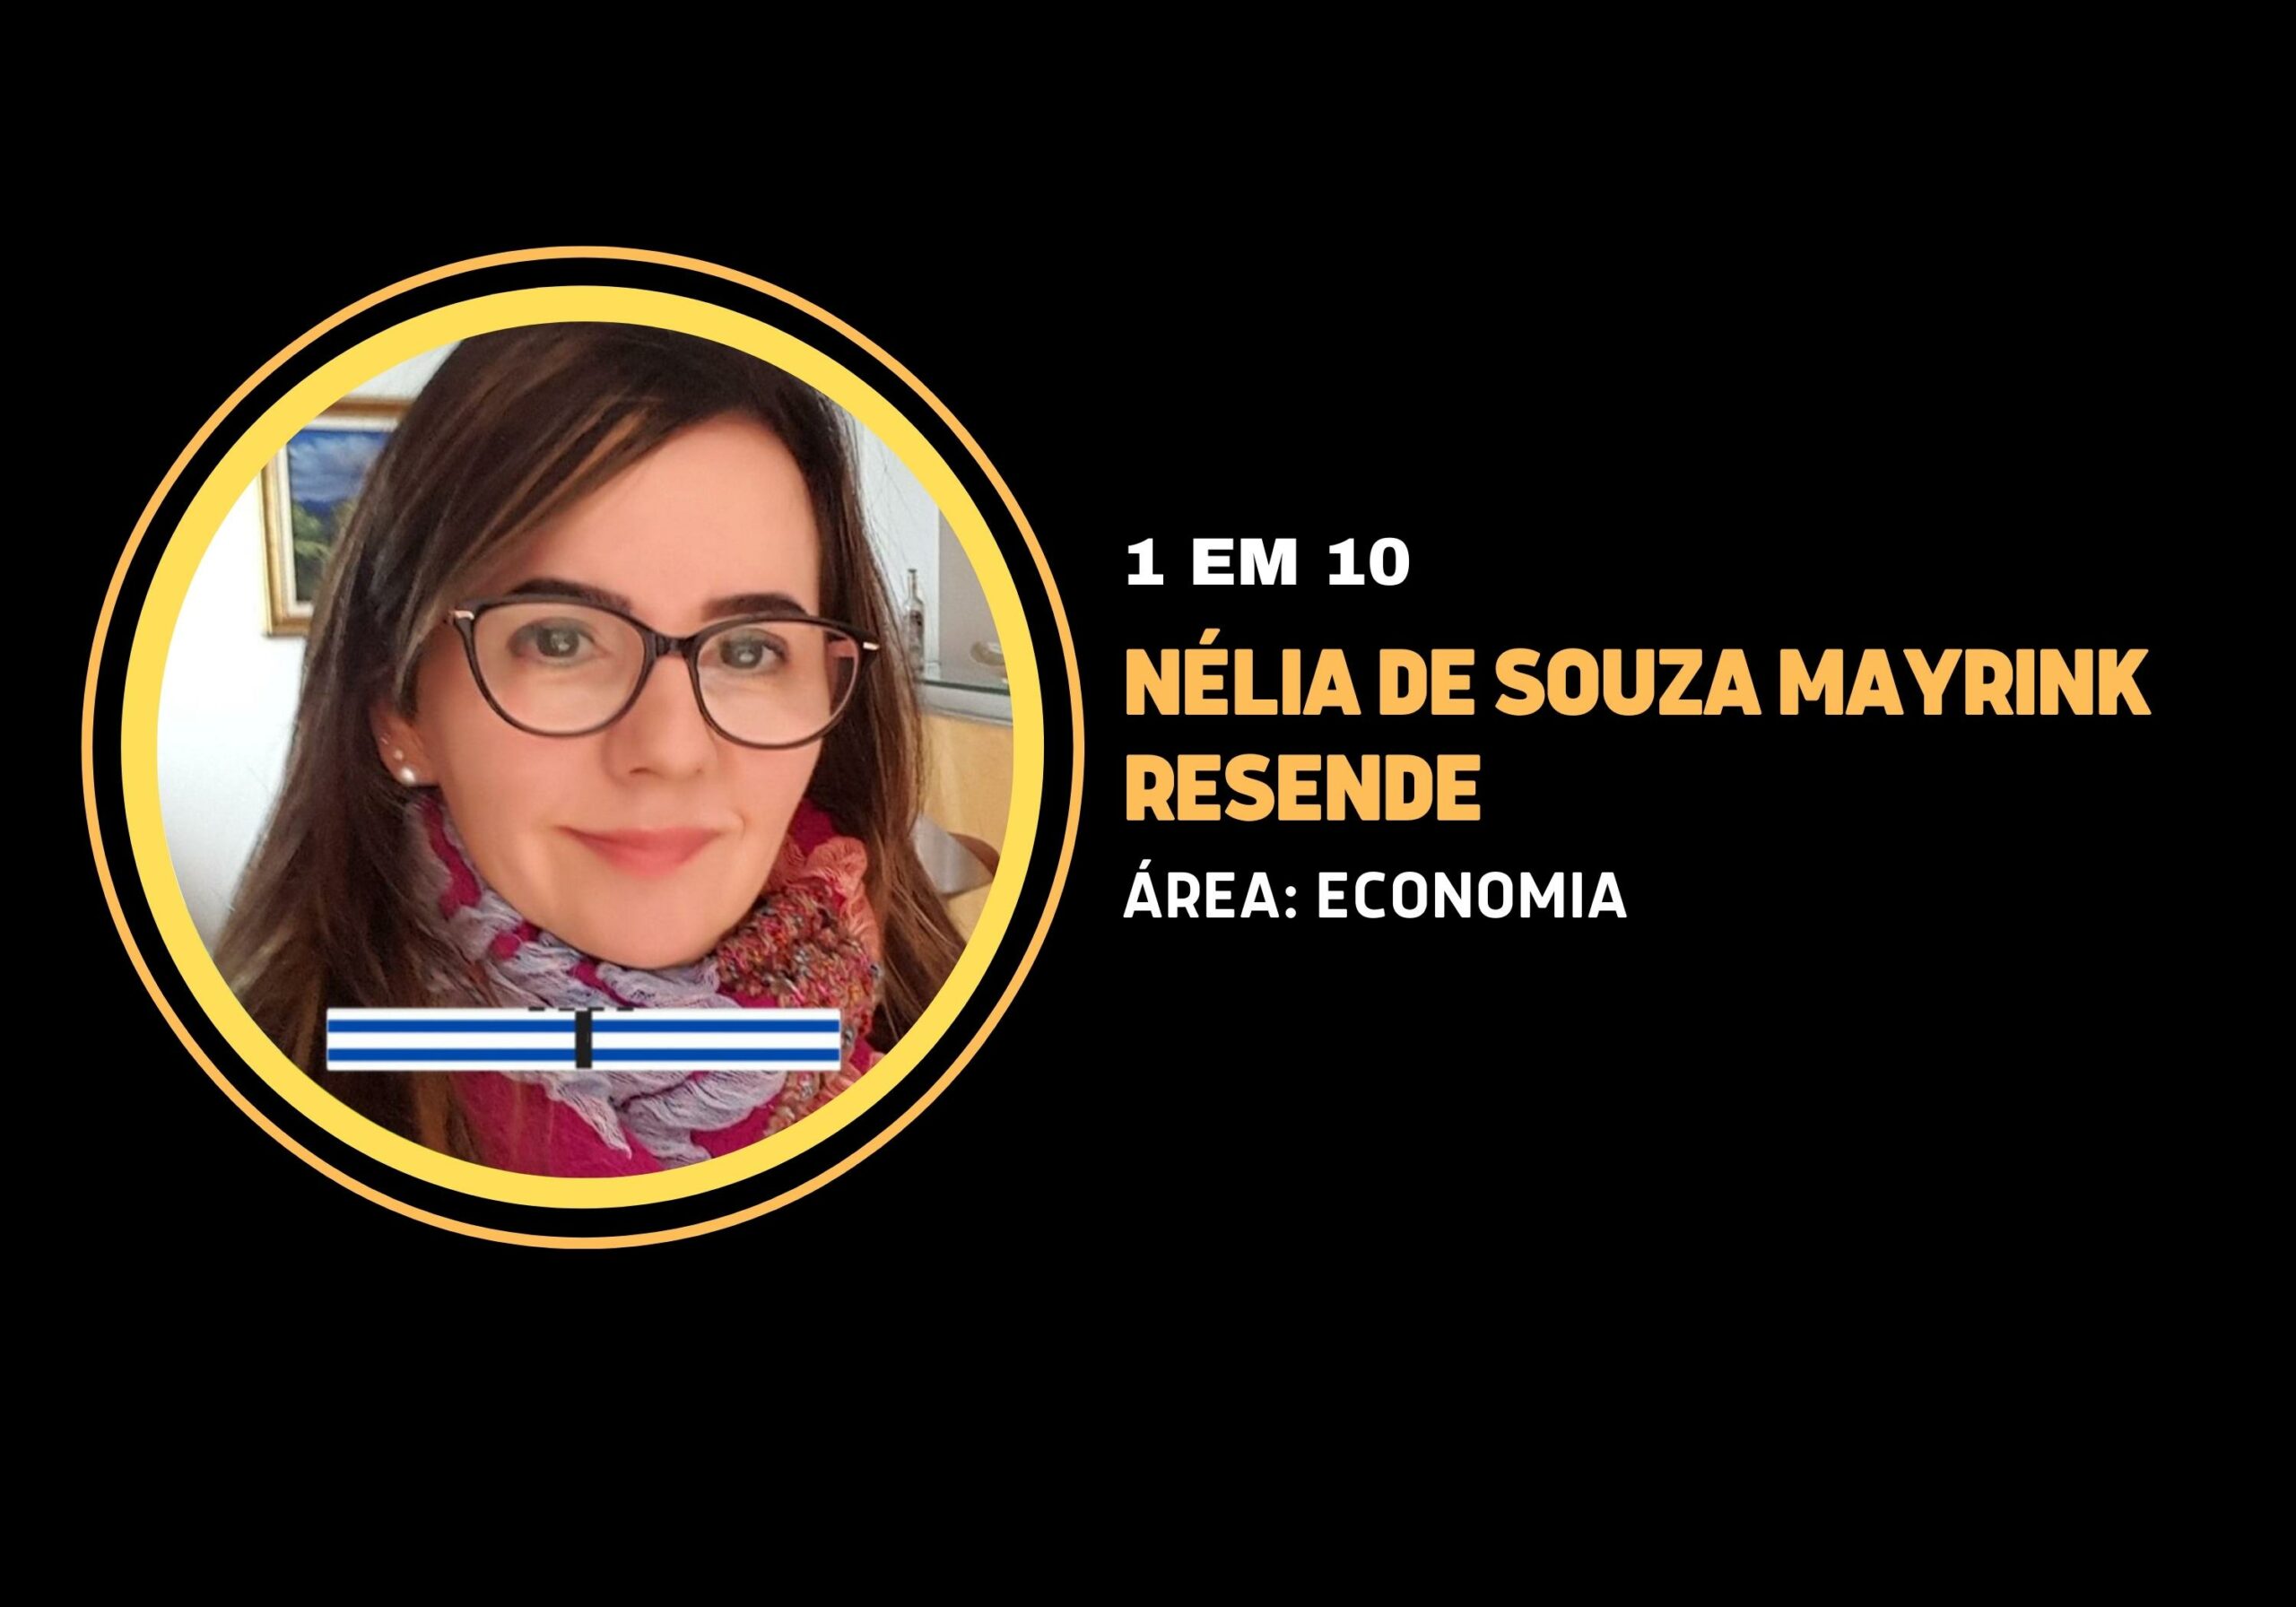 Nélia de Souza Mayrink Resende | 1 em 10